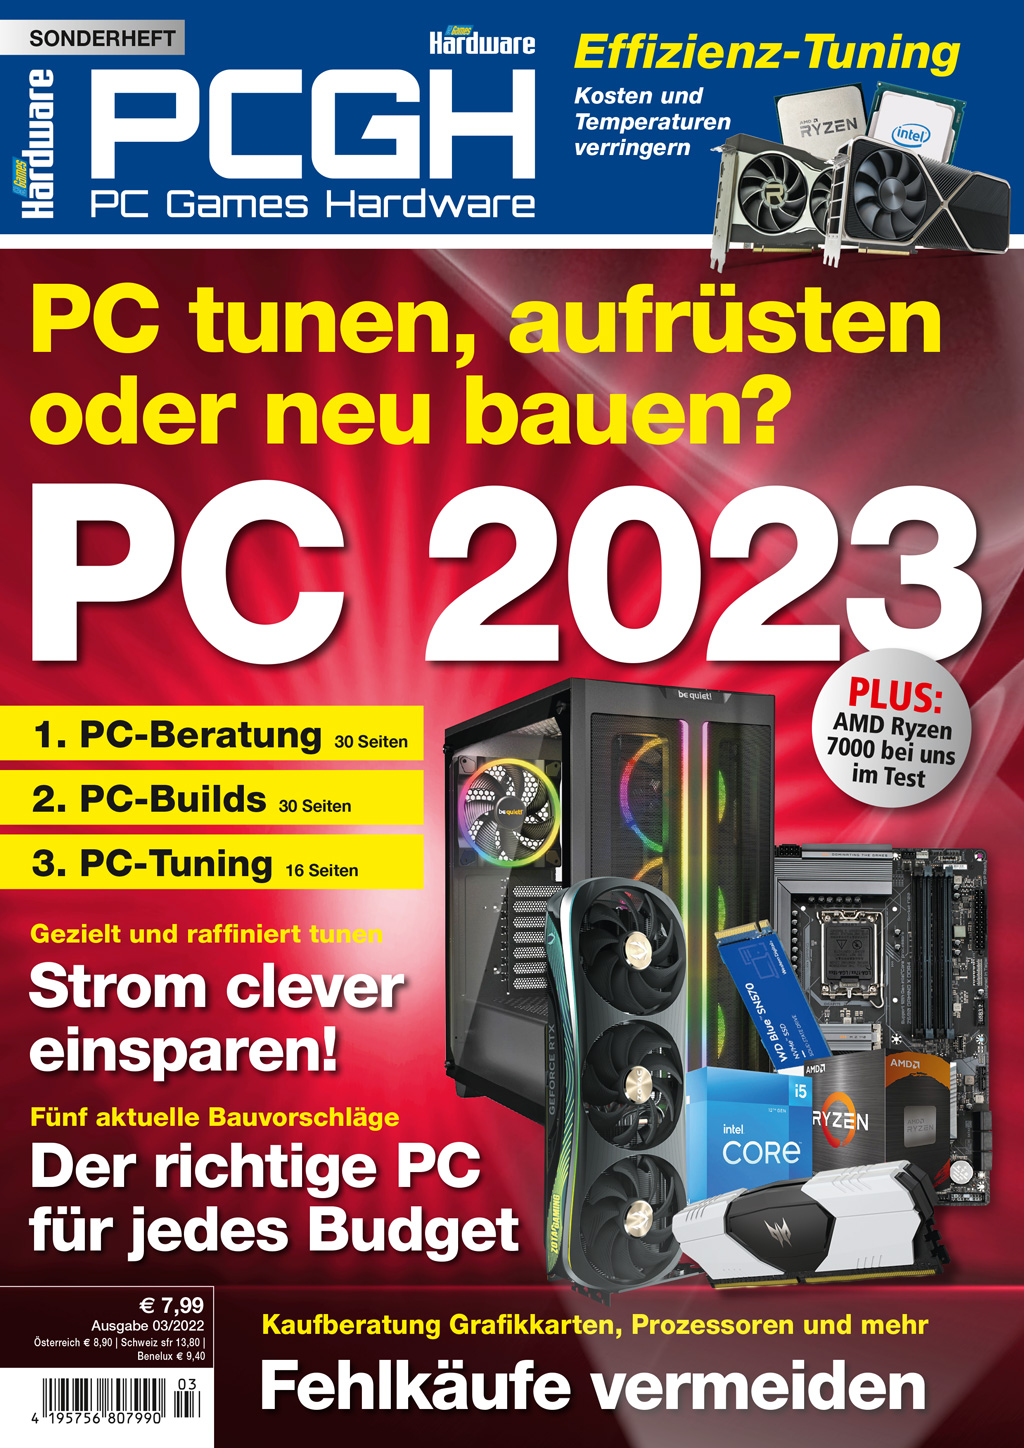 PCGH Sonderheft  03/2022 